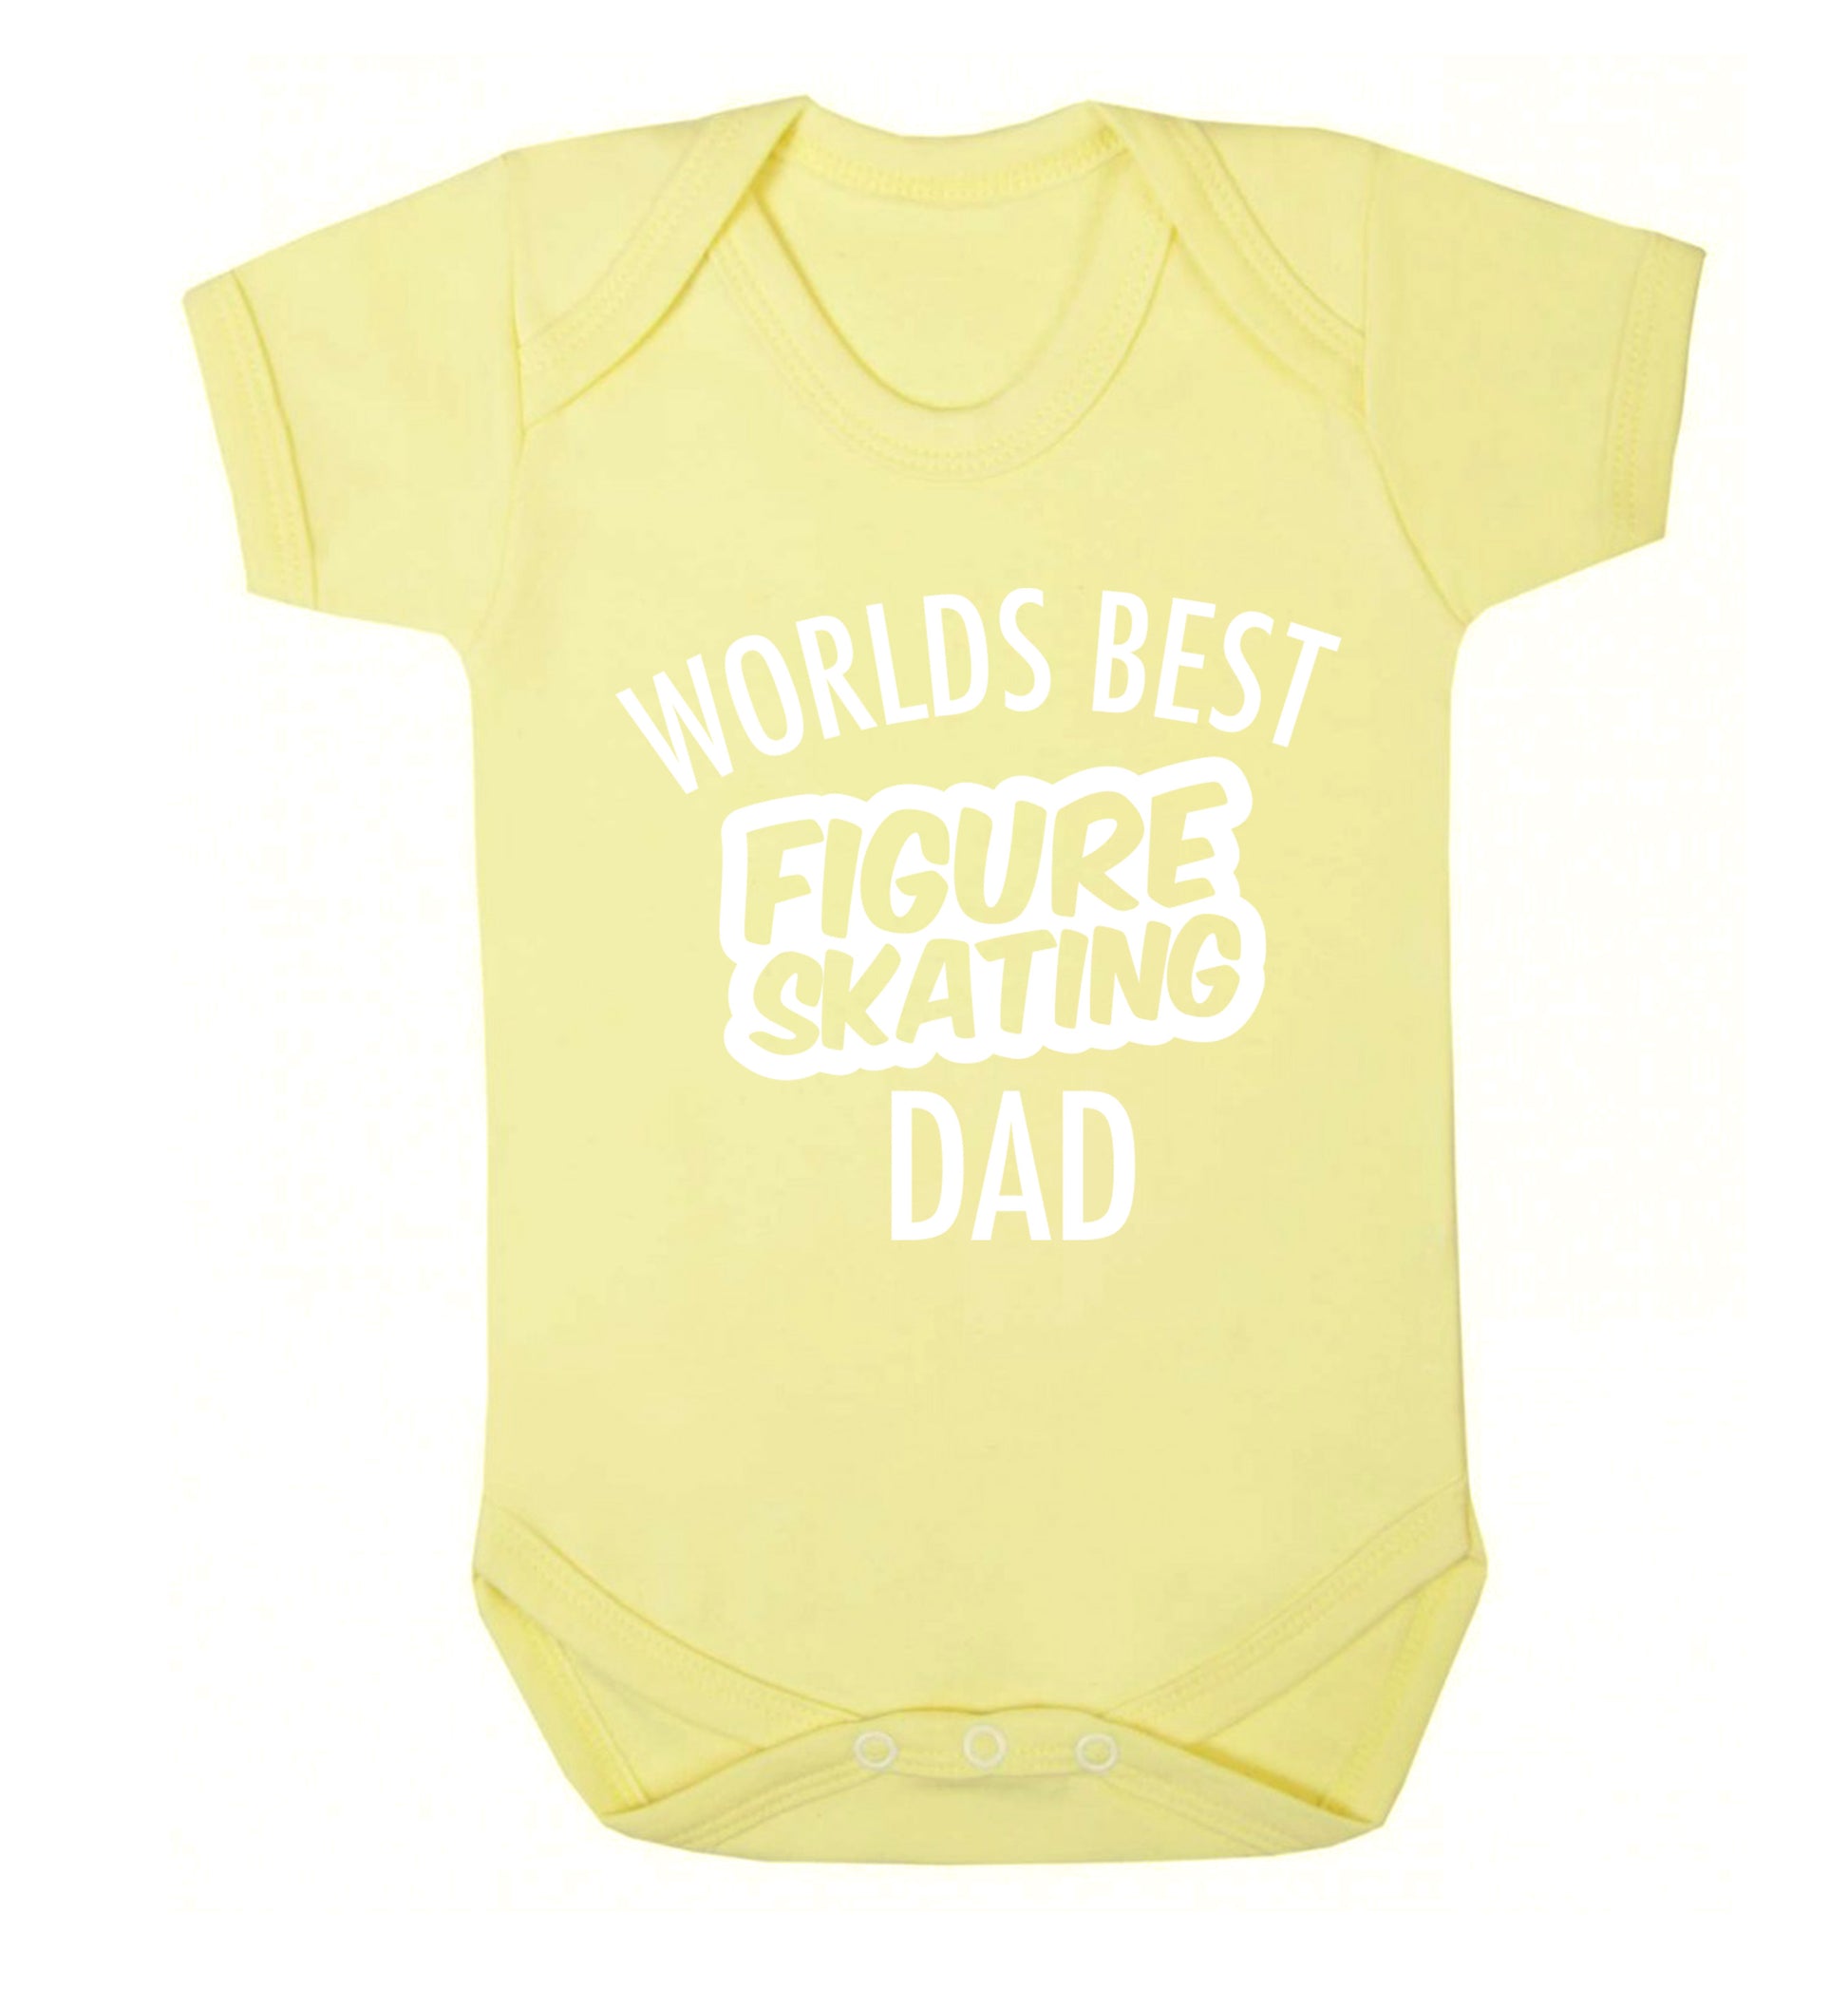 Worlds best figure skating dad Baby Vest pale yellow 18-24 months